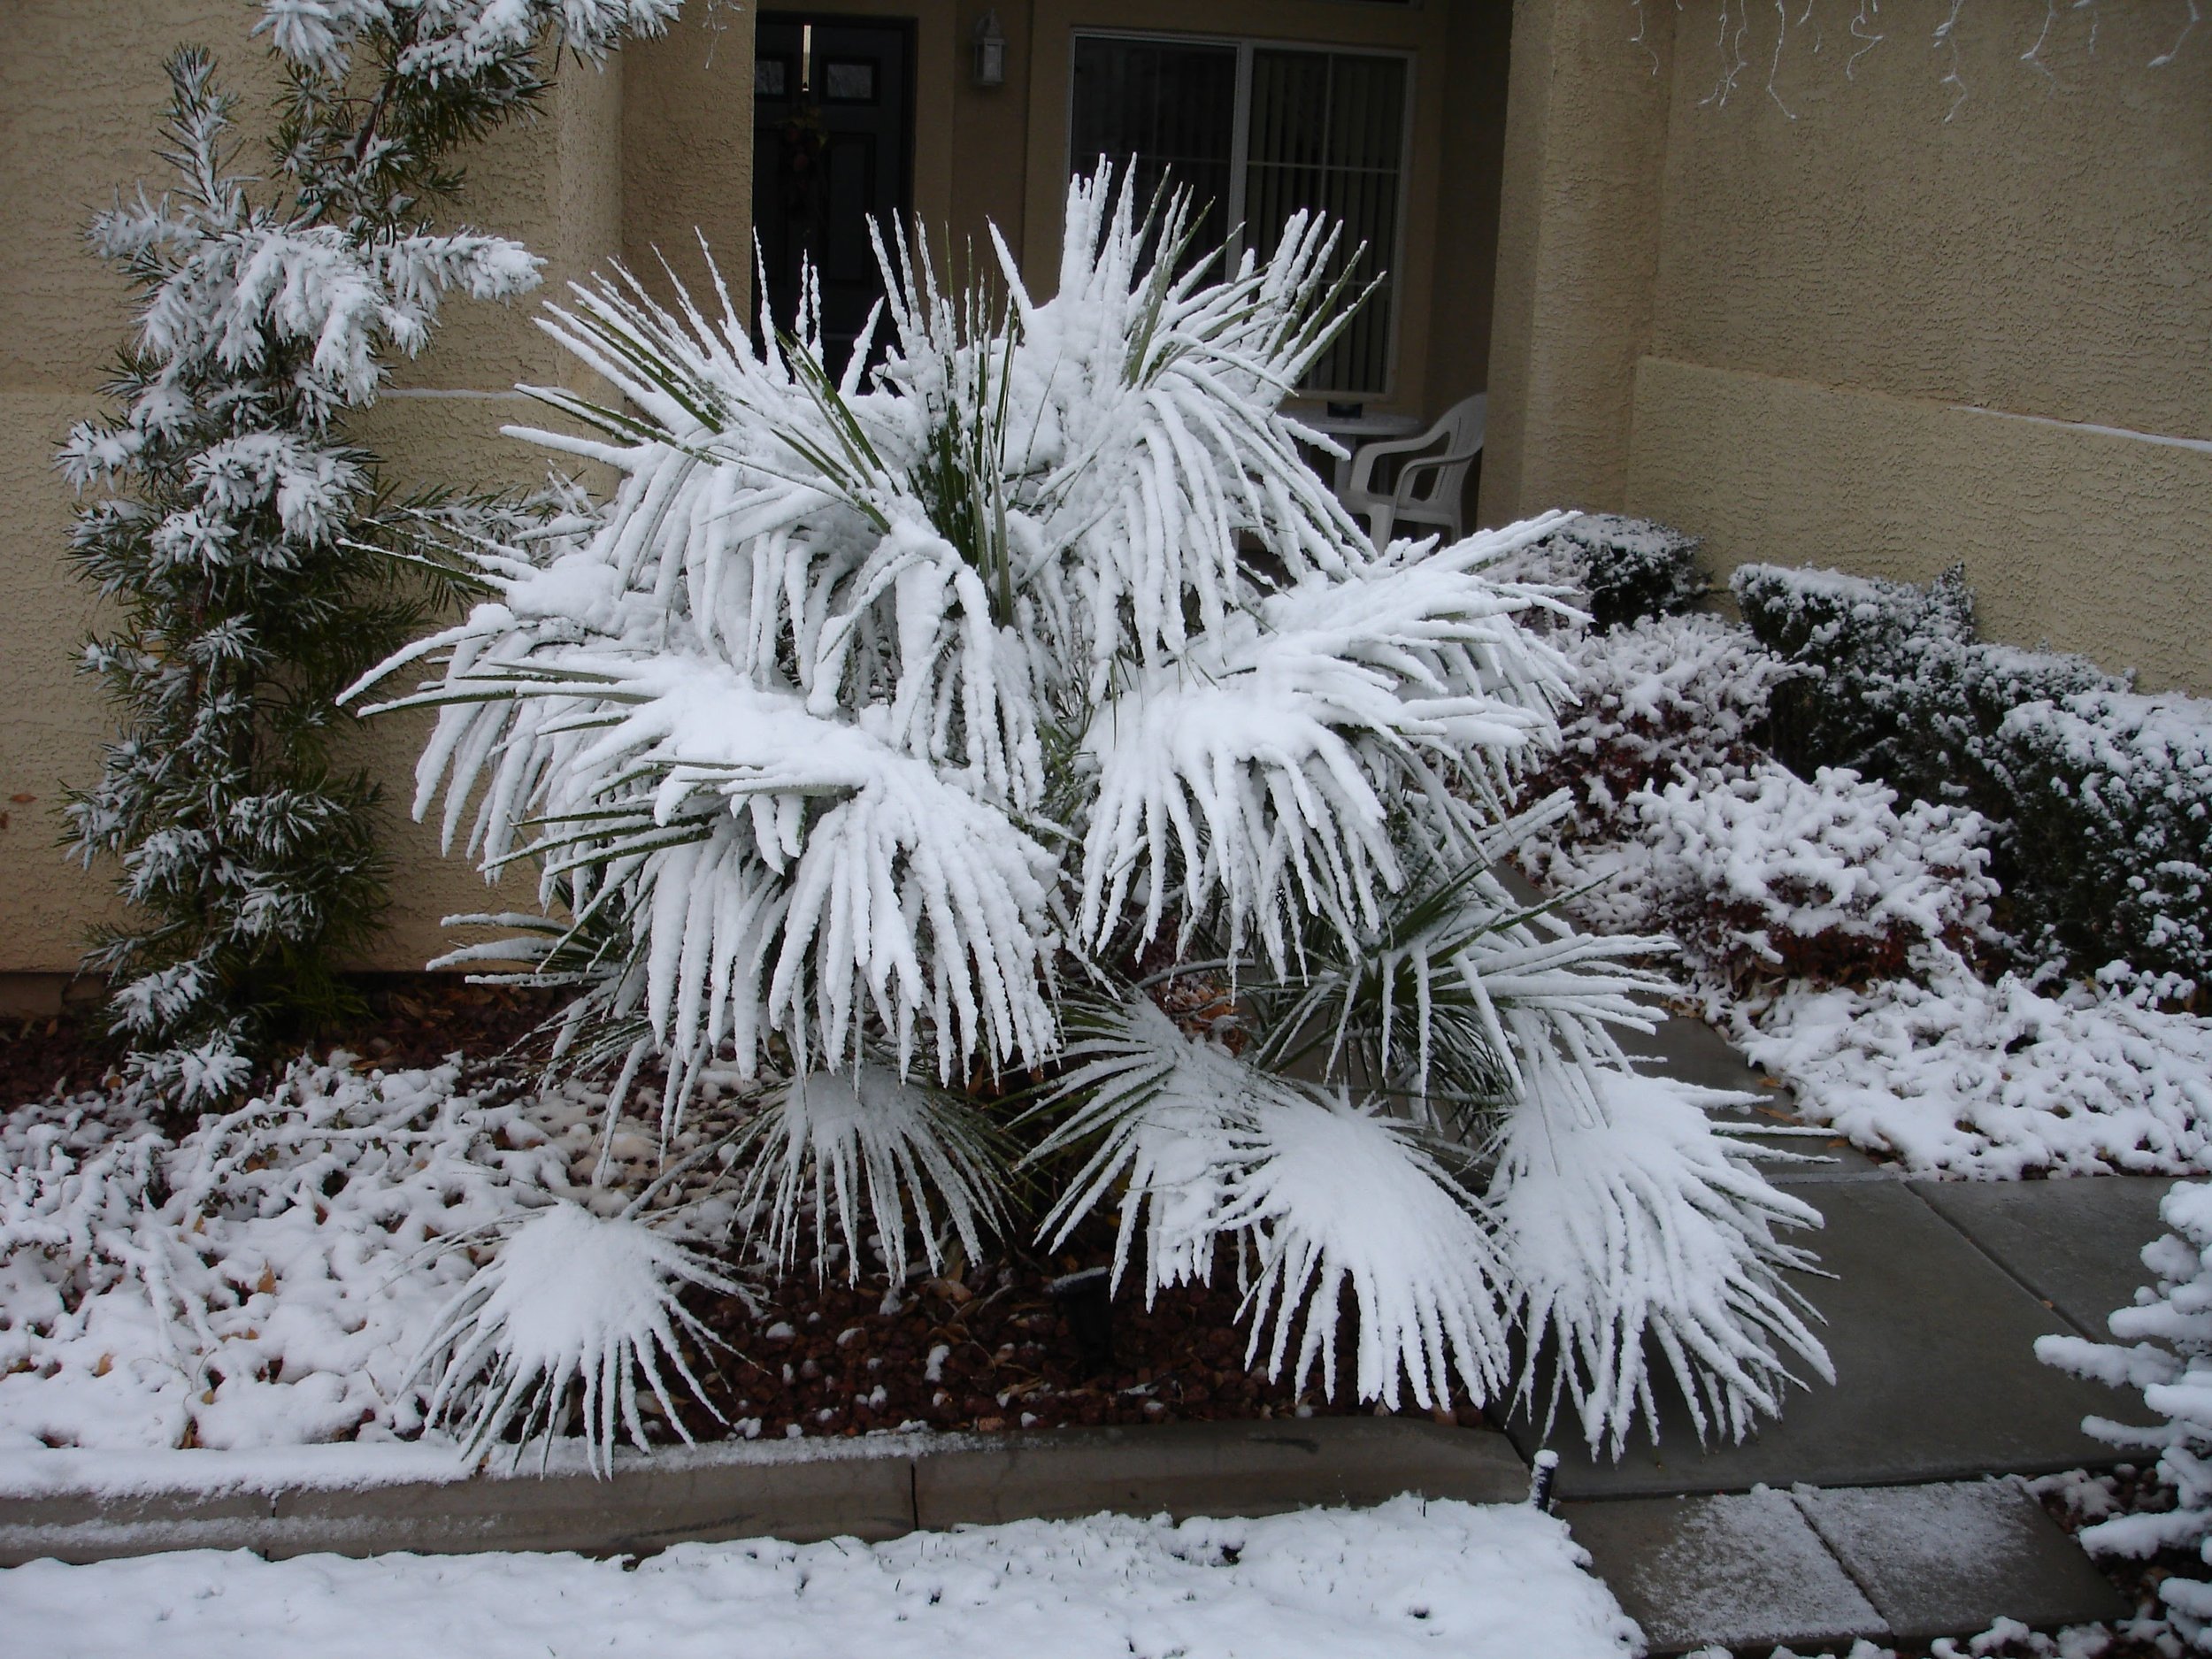 Snowstorm - December 2006